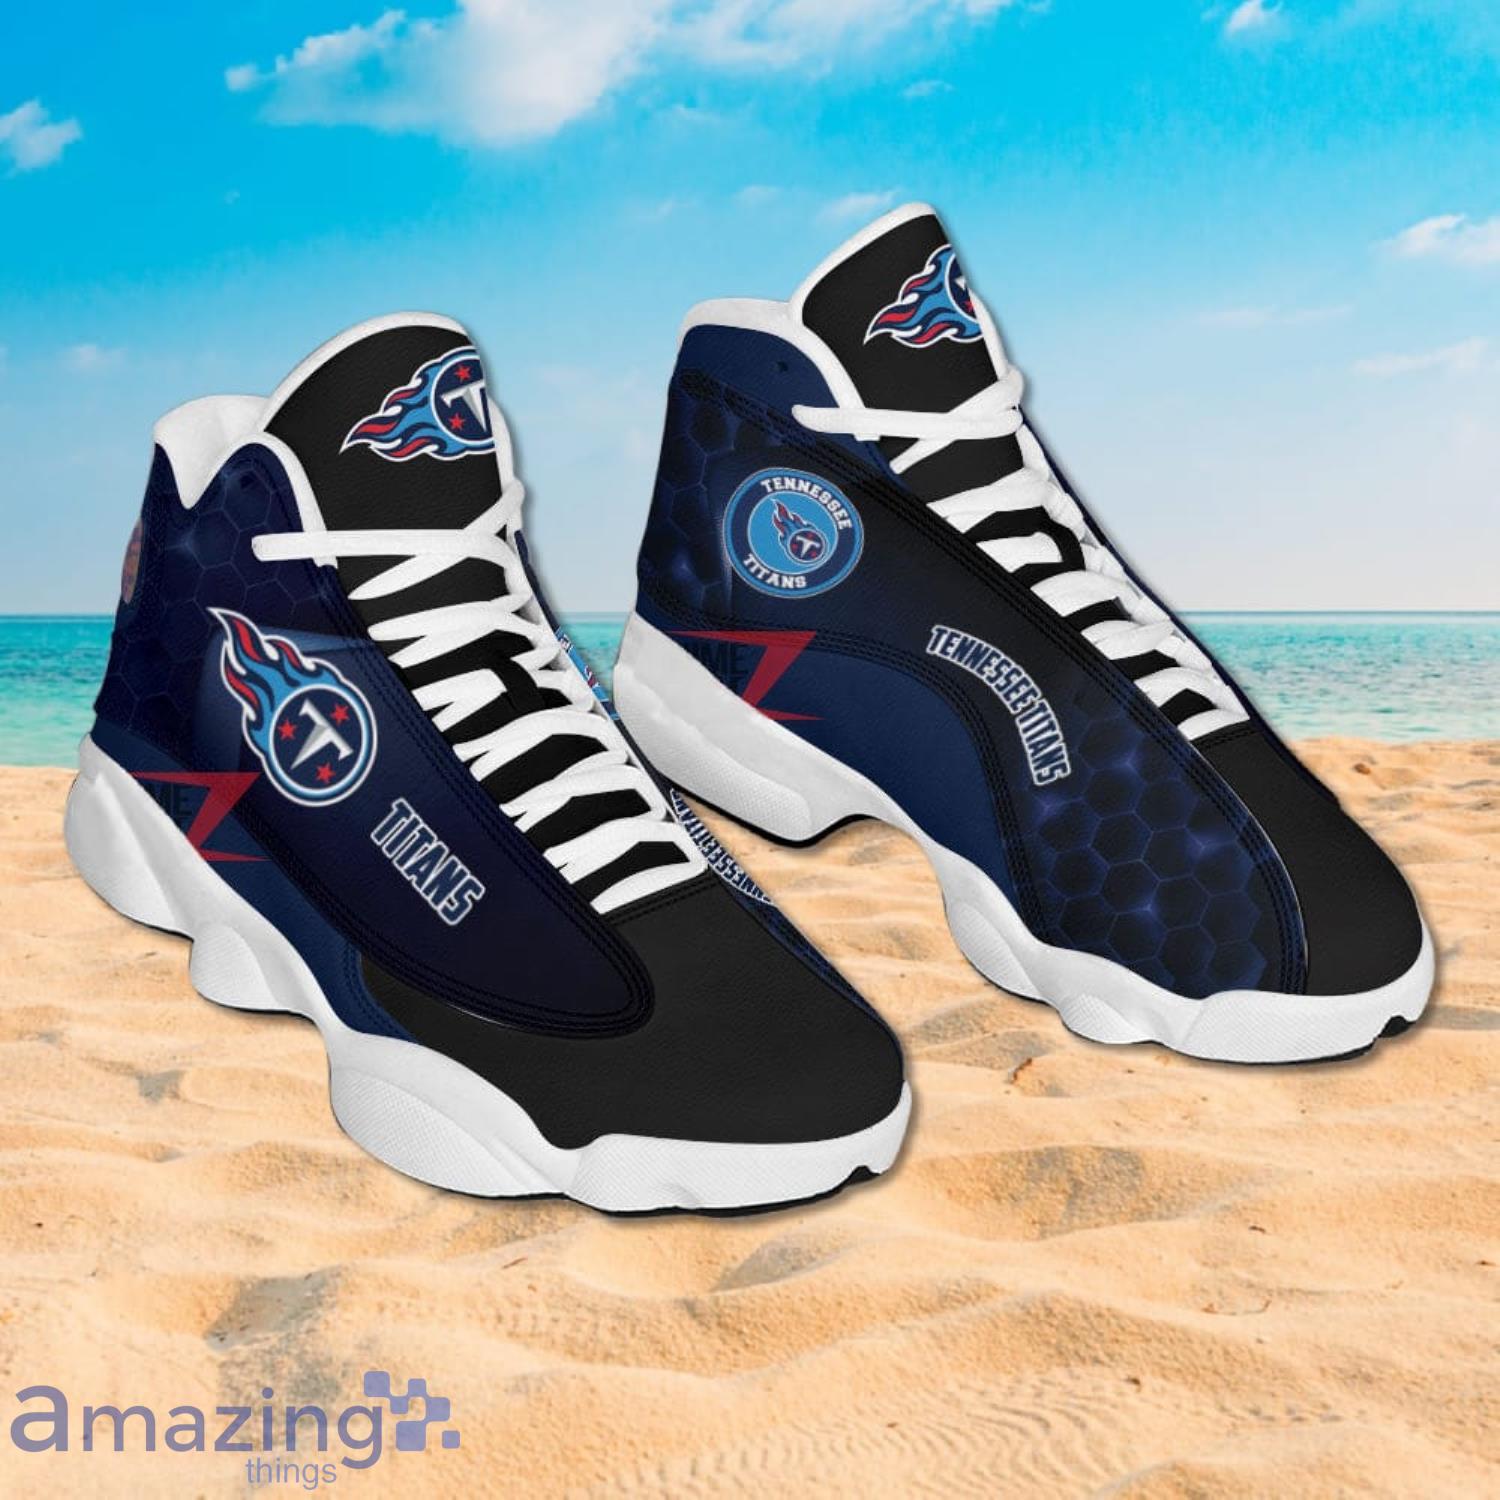 Nfl tennessee titans air jordan 13 shoes - custom jd13 sneakers